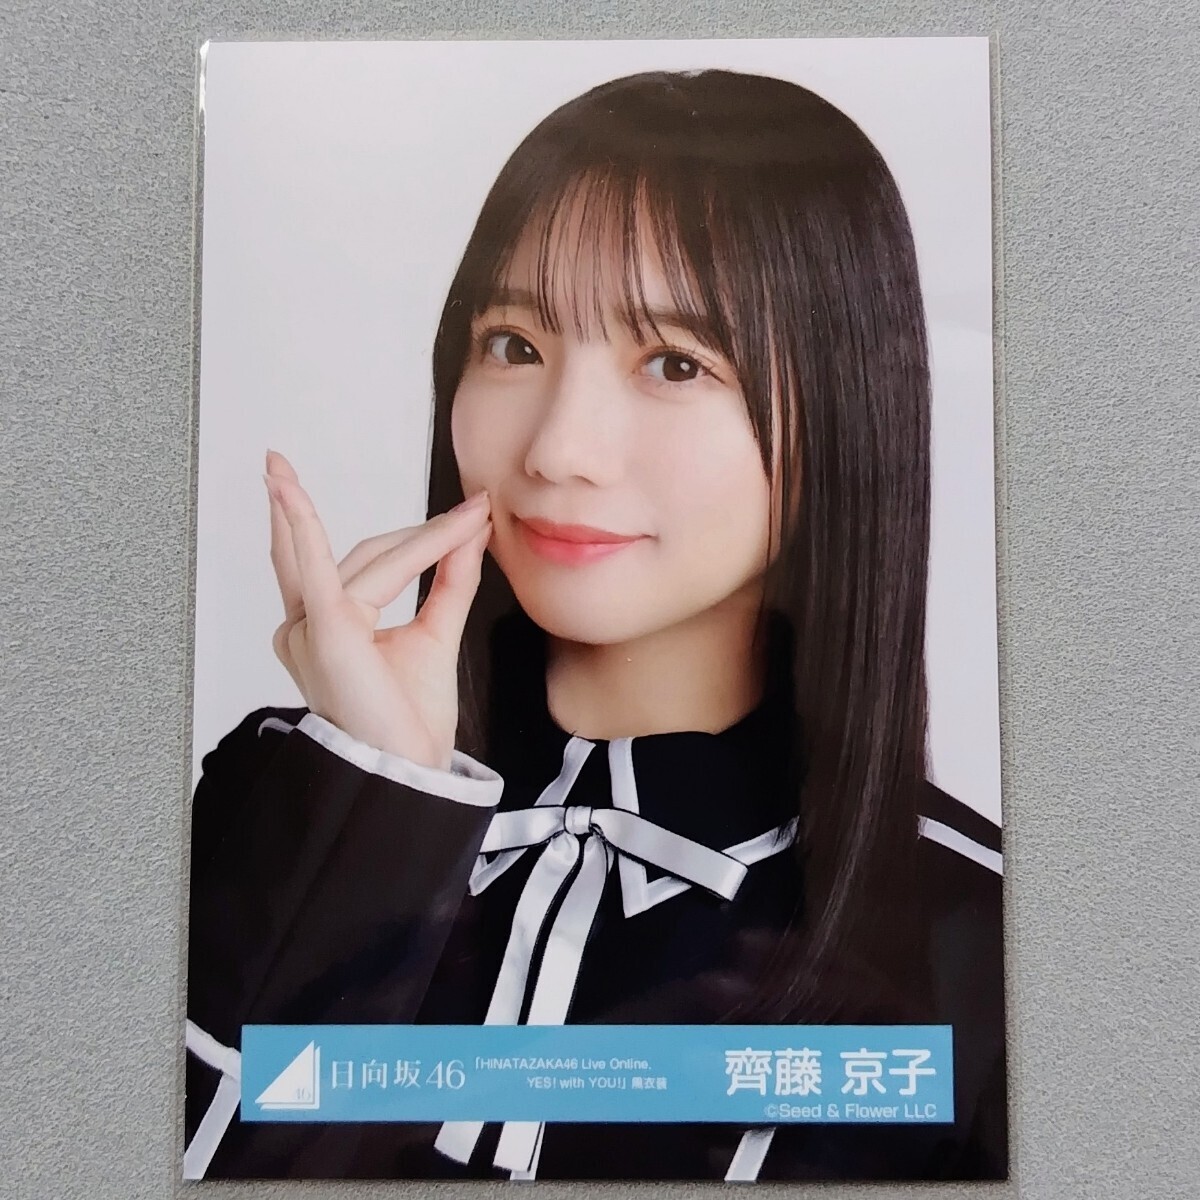  город Хюга склон 46. глициния столица .HINATAZAKA46 Live Online YES! with YOU! чёрный костюм life photograph 